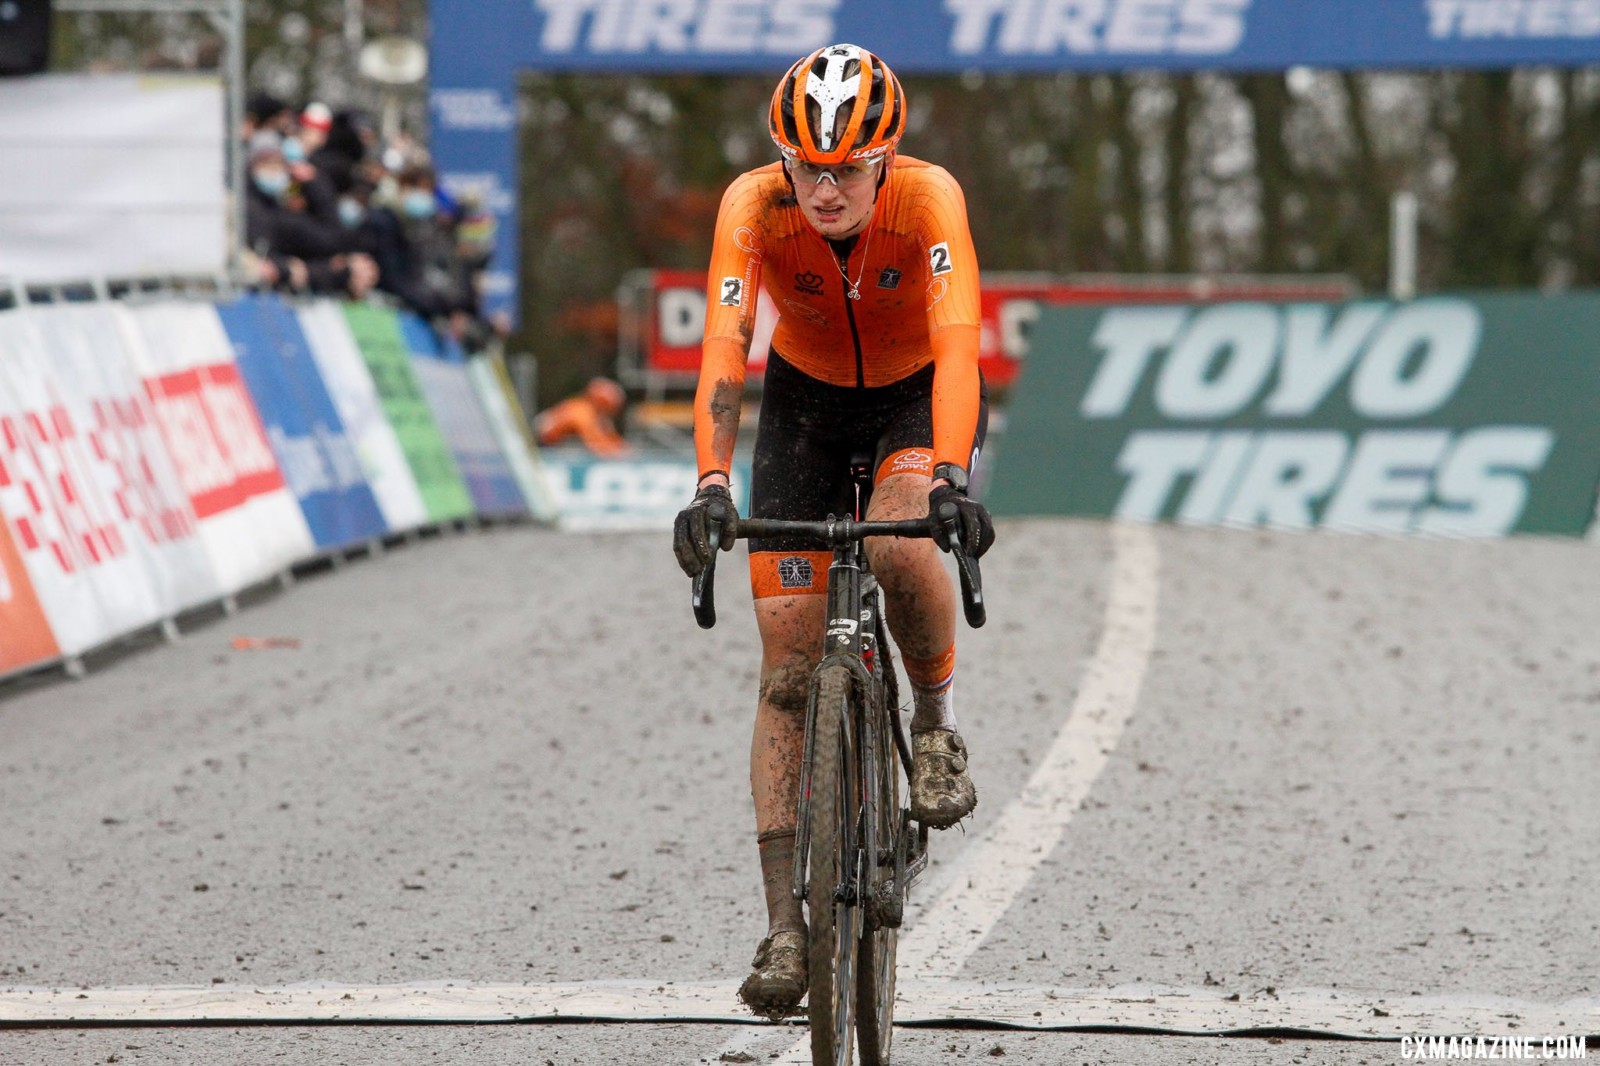 Leonie Bentveld crossing the finish line. 2021 Namur UCI Cyclocross World Cup, Junior Women. © B. Hazen / Cyclocross Magazine